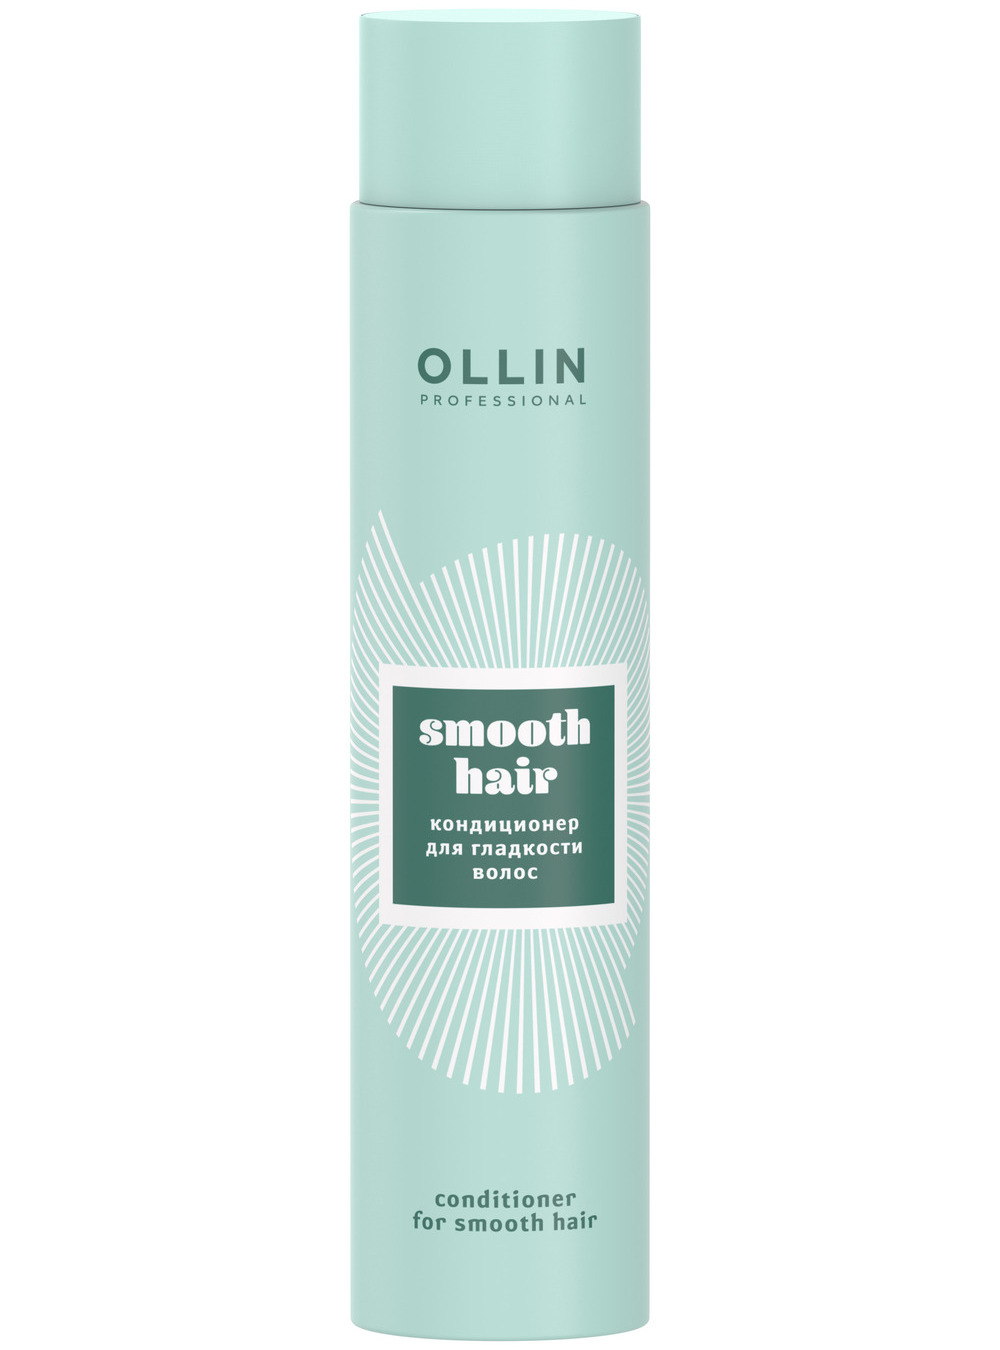 Ollin Professional Кондиционер для гладкости волос, 300 мл (Ollin Professional, Curl  Smooth Hair)